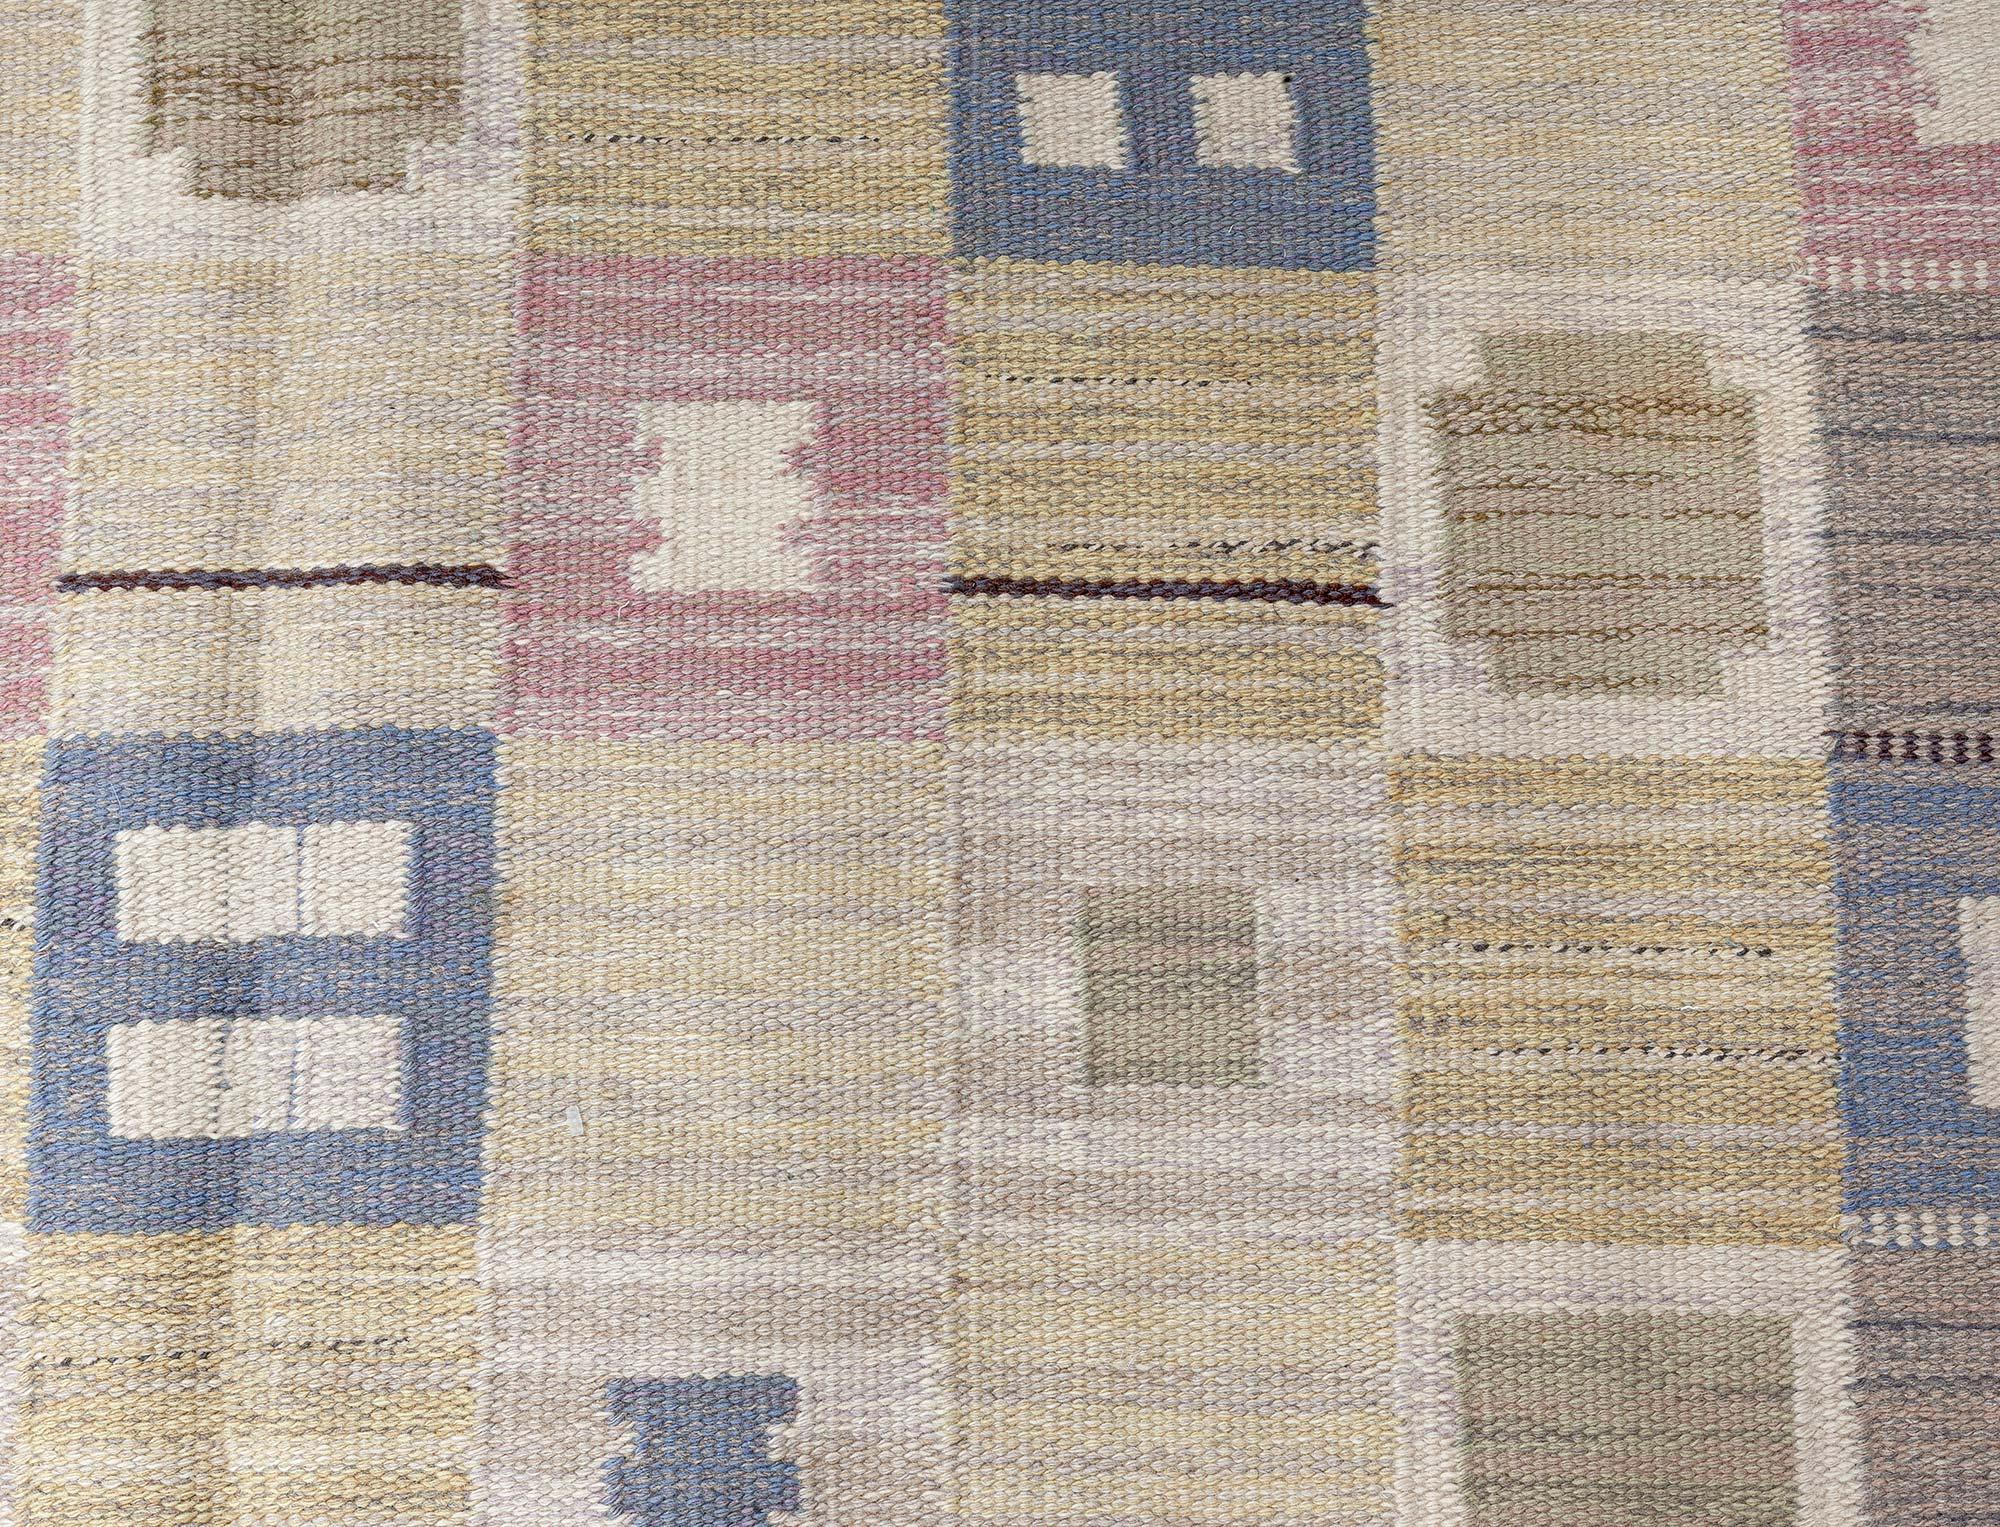 Vintage Swedish flat woven rug
Size: 5'1